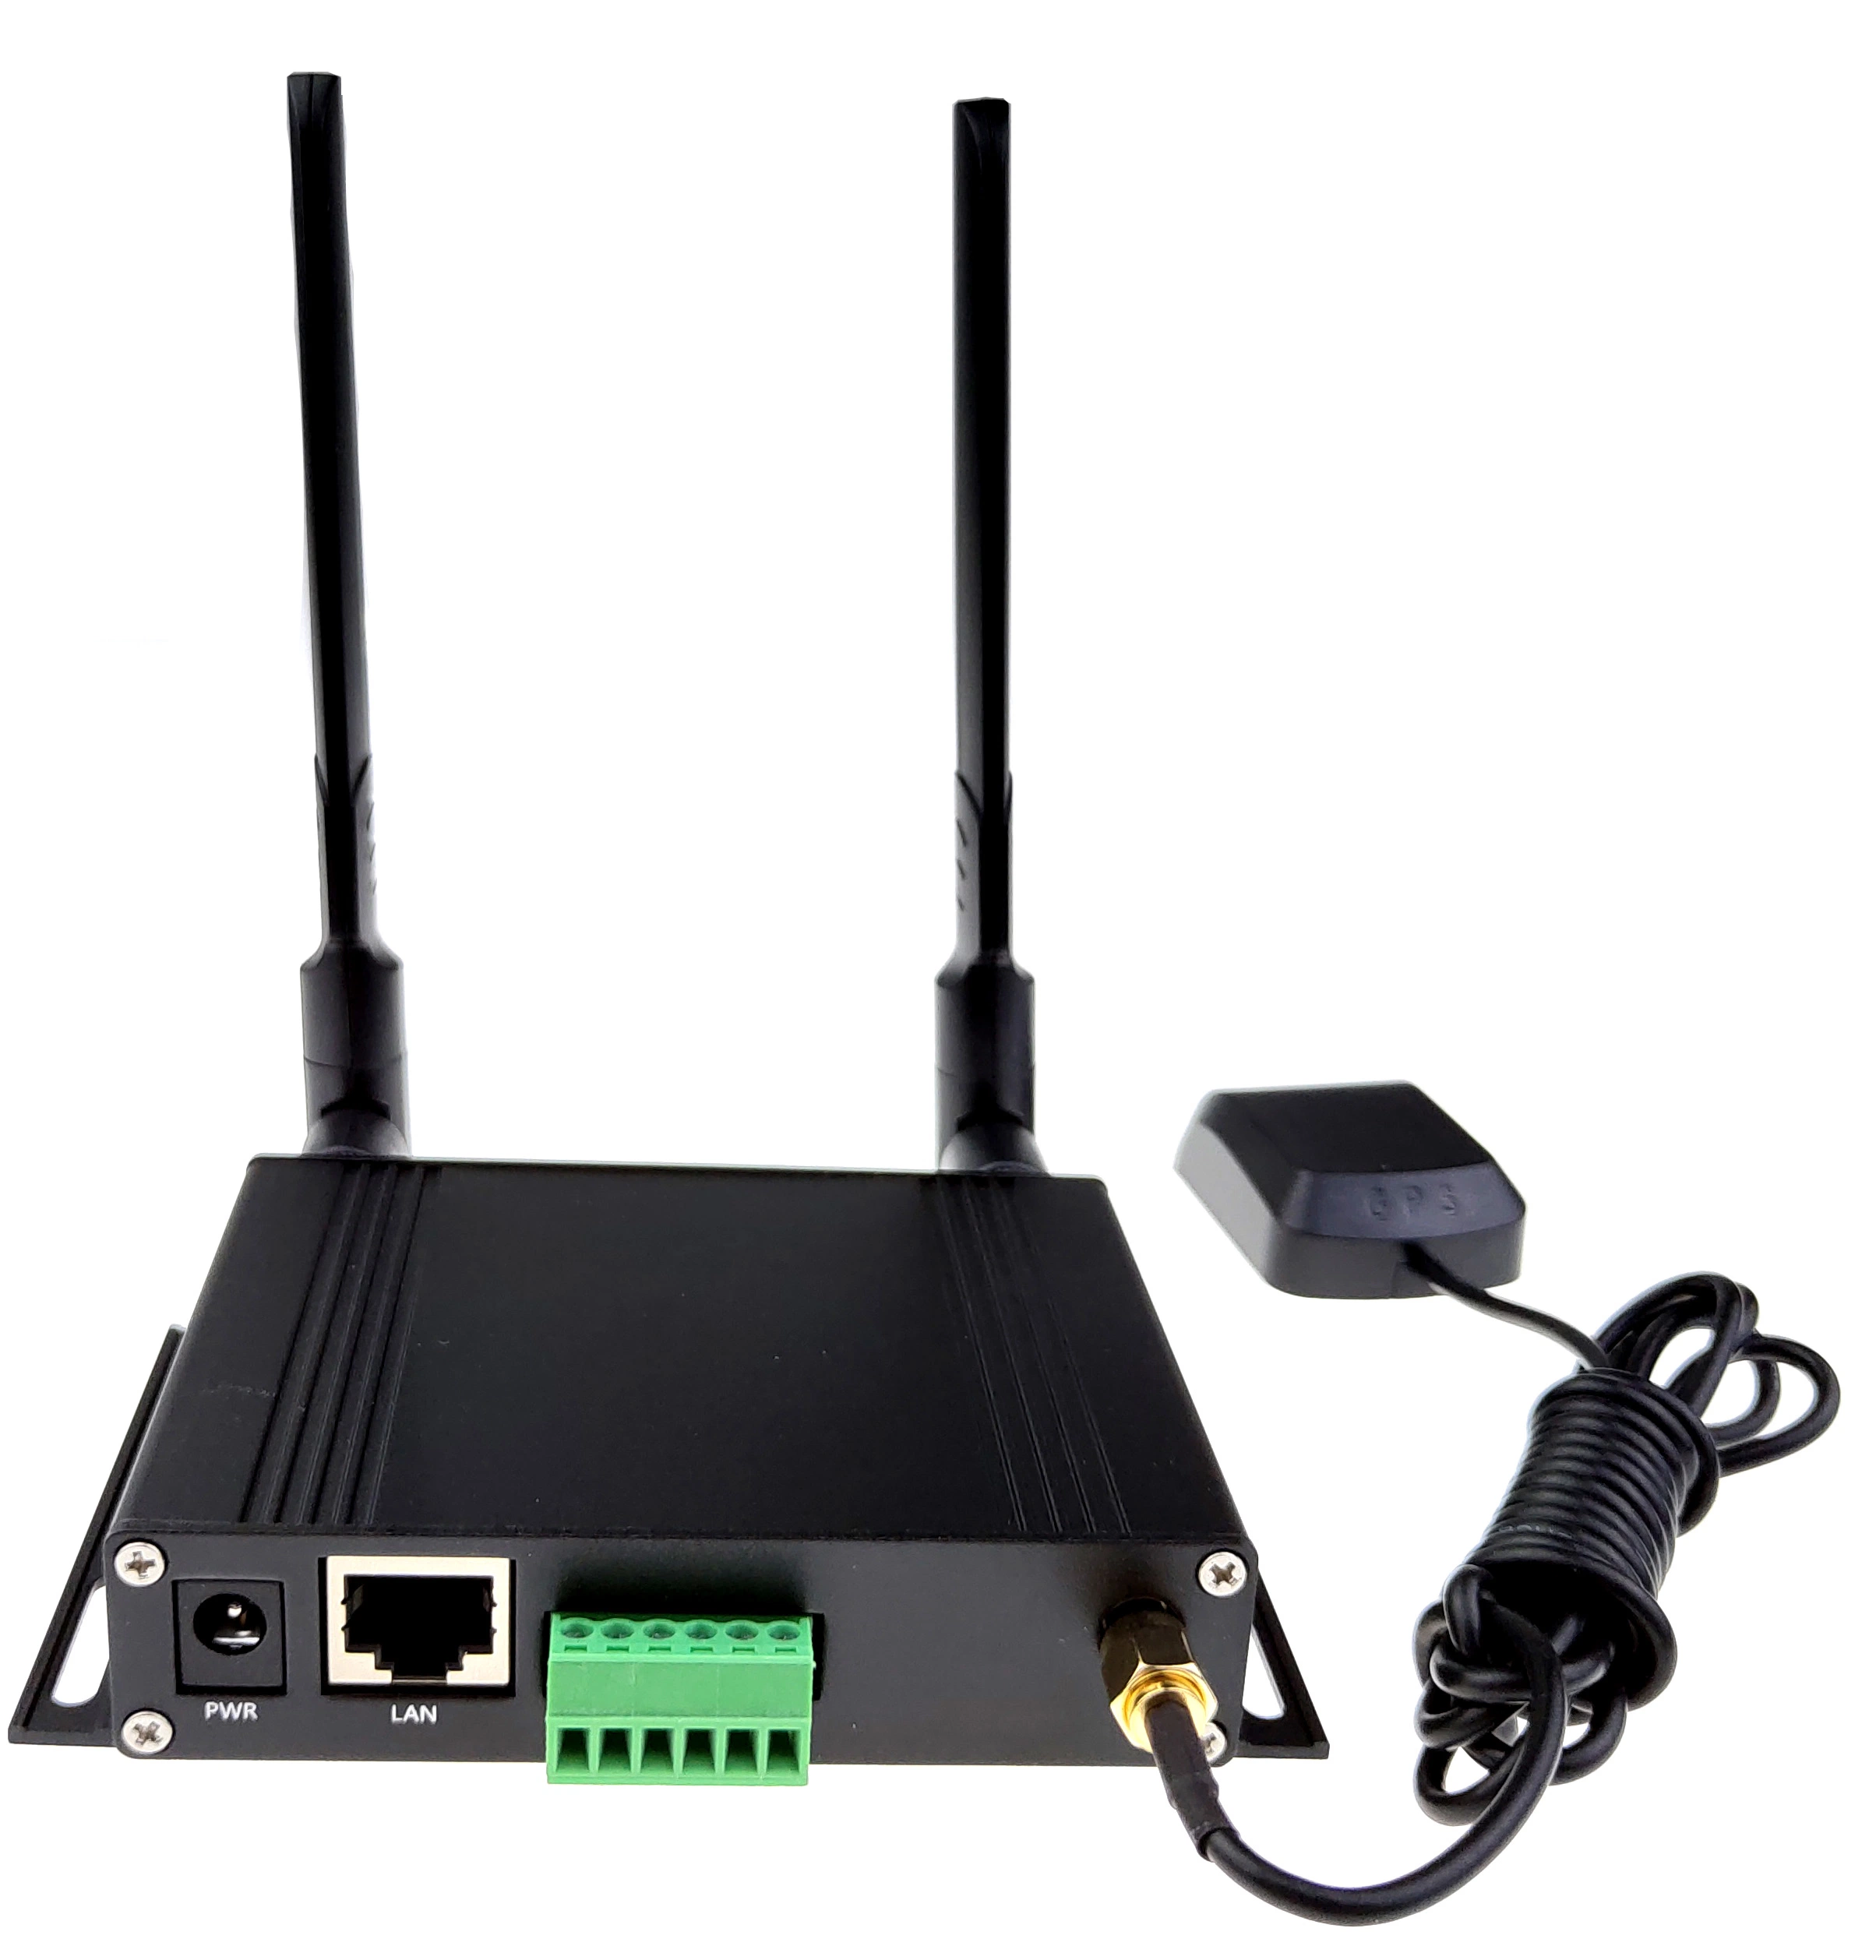 Lte/ 4G WCDMA WiFi 3G Router with 2*2 4G/WiFi MIMO Antenna Modem Support Modbus/VPN/Openvpn/Ipsec/Mqtt